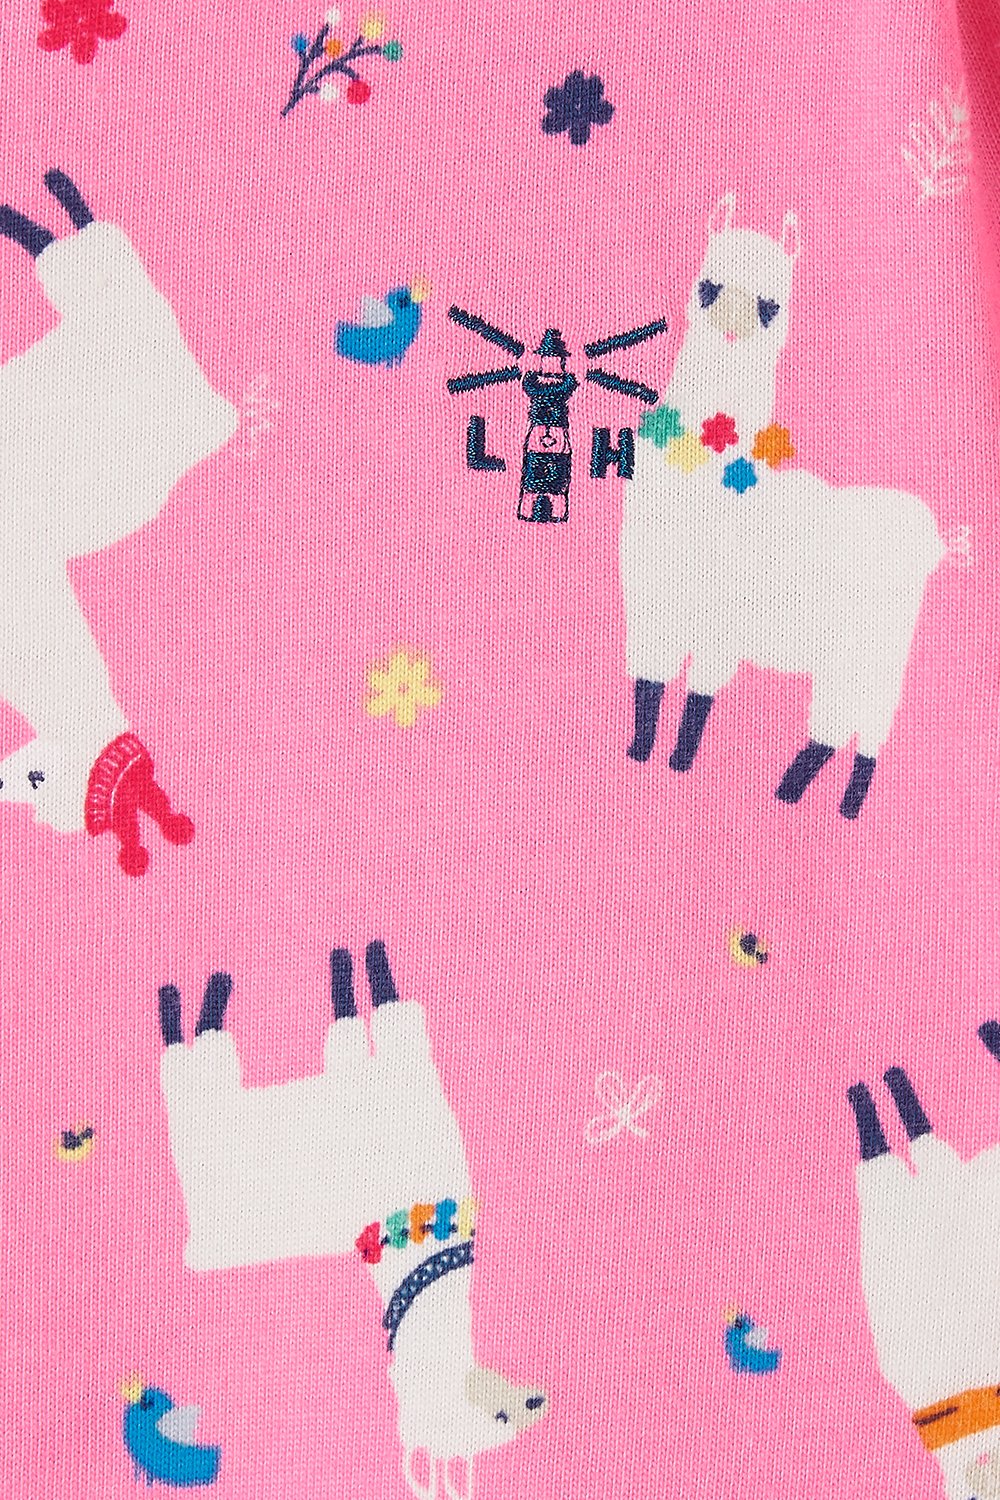 Lighthouse Kids 'Ellie' Dress - Llama Print